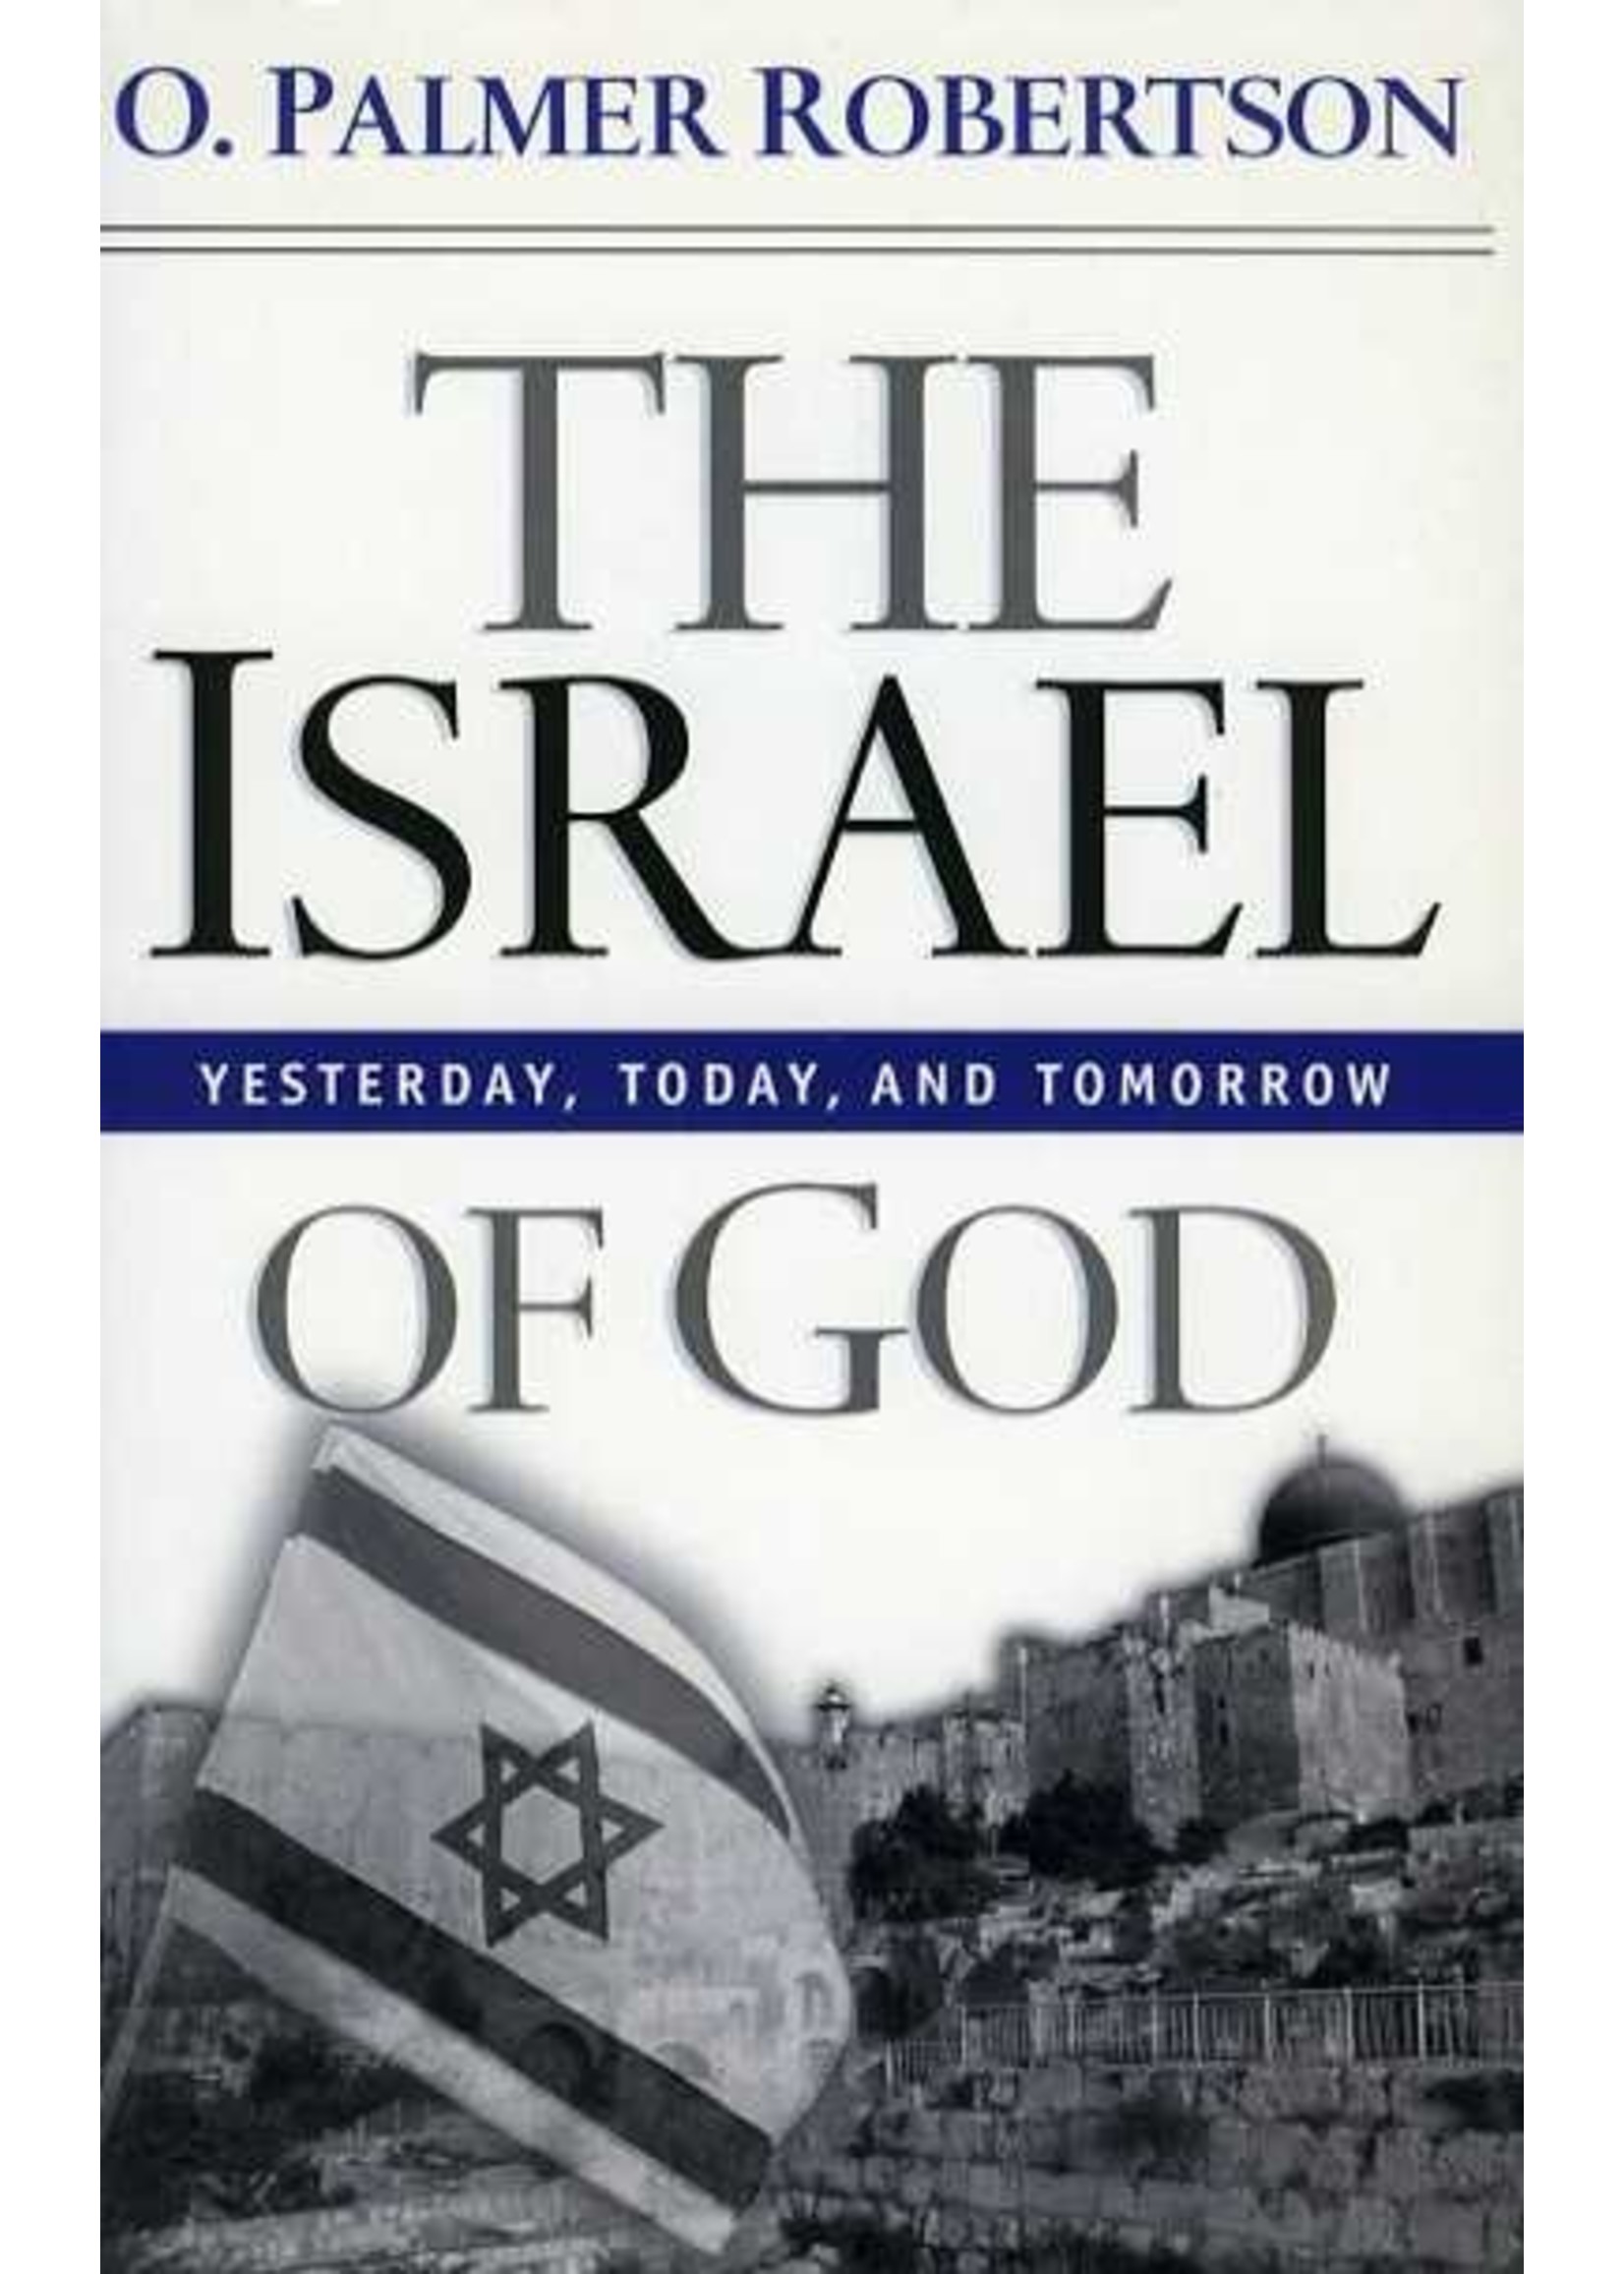 P&R Publishing The Israel of God - O. Palmer Robertson